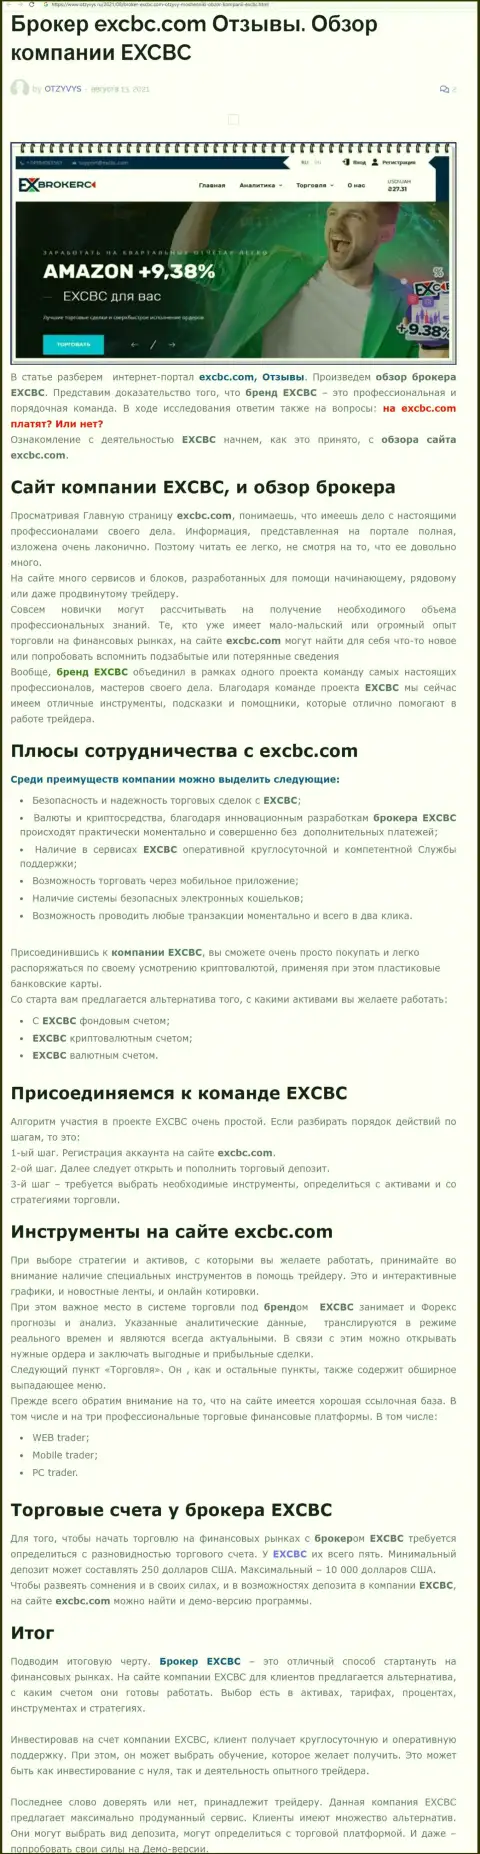 Материал об форекс дилере EXCBC на сайте Отзывс Ру